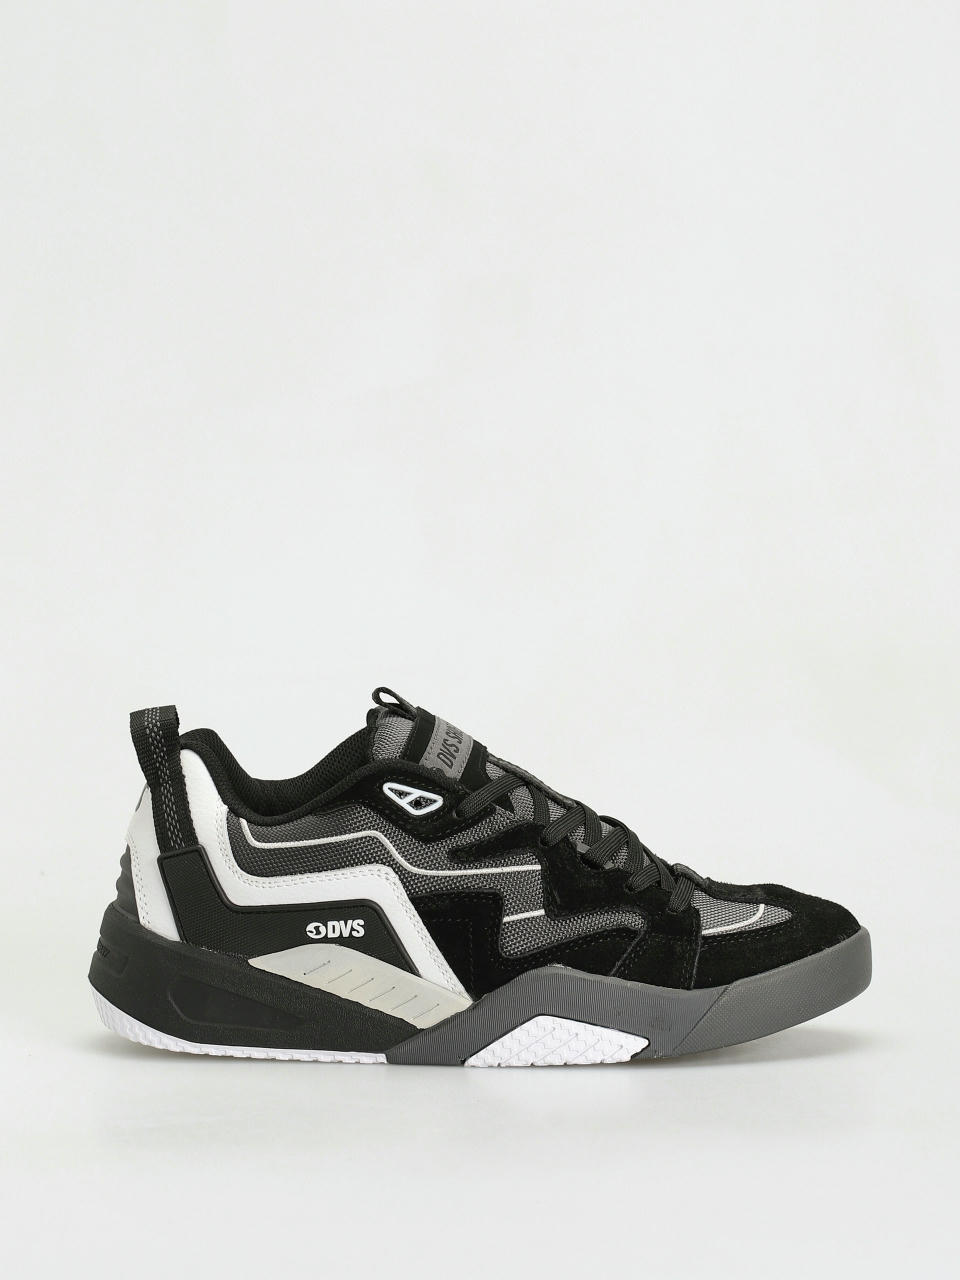 DVS Devious Schuhe (black charcoal white suede)